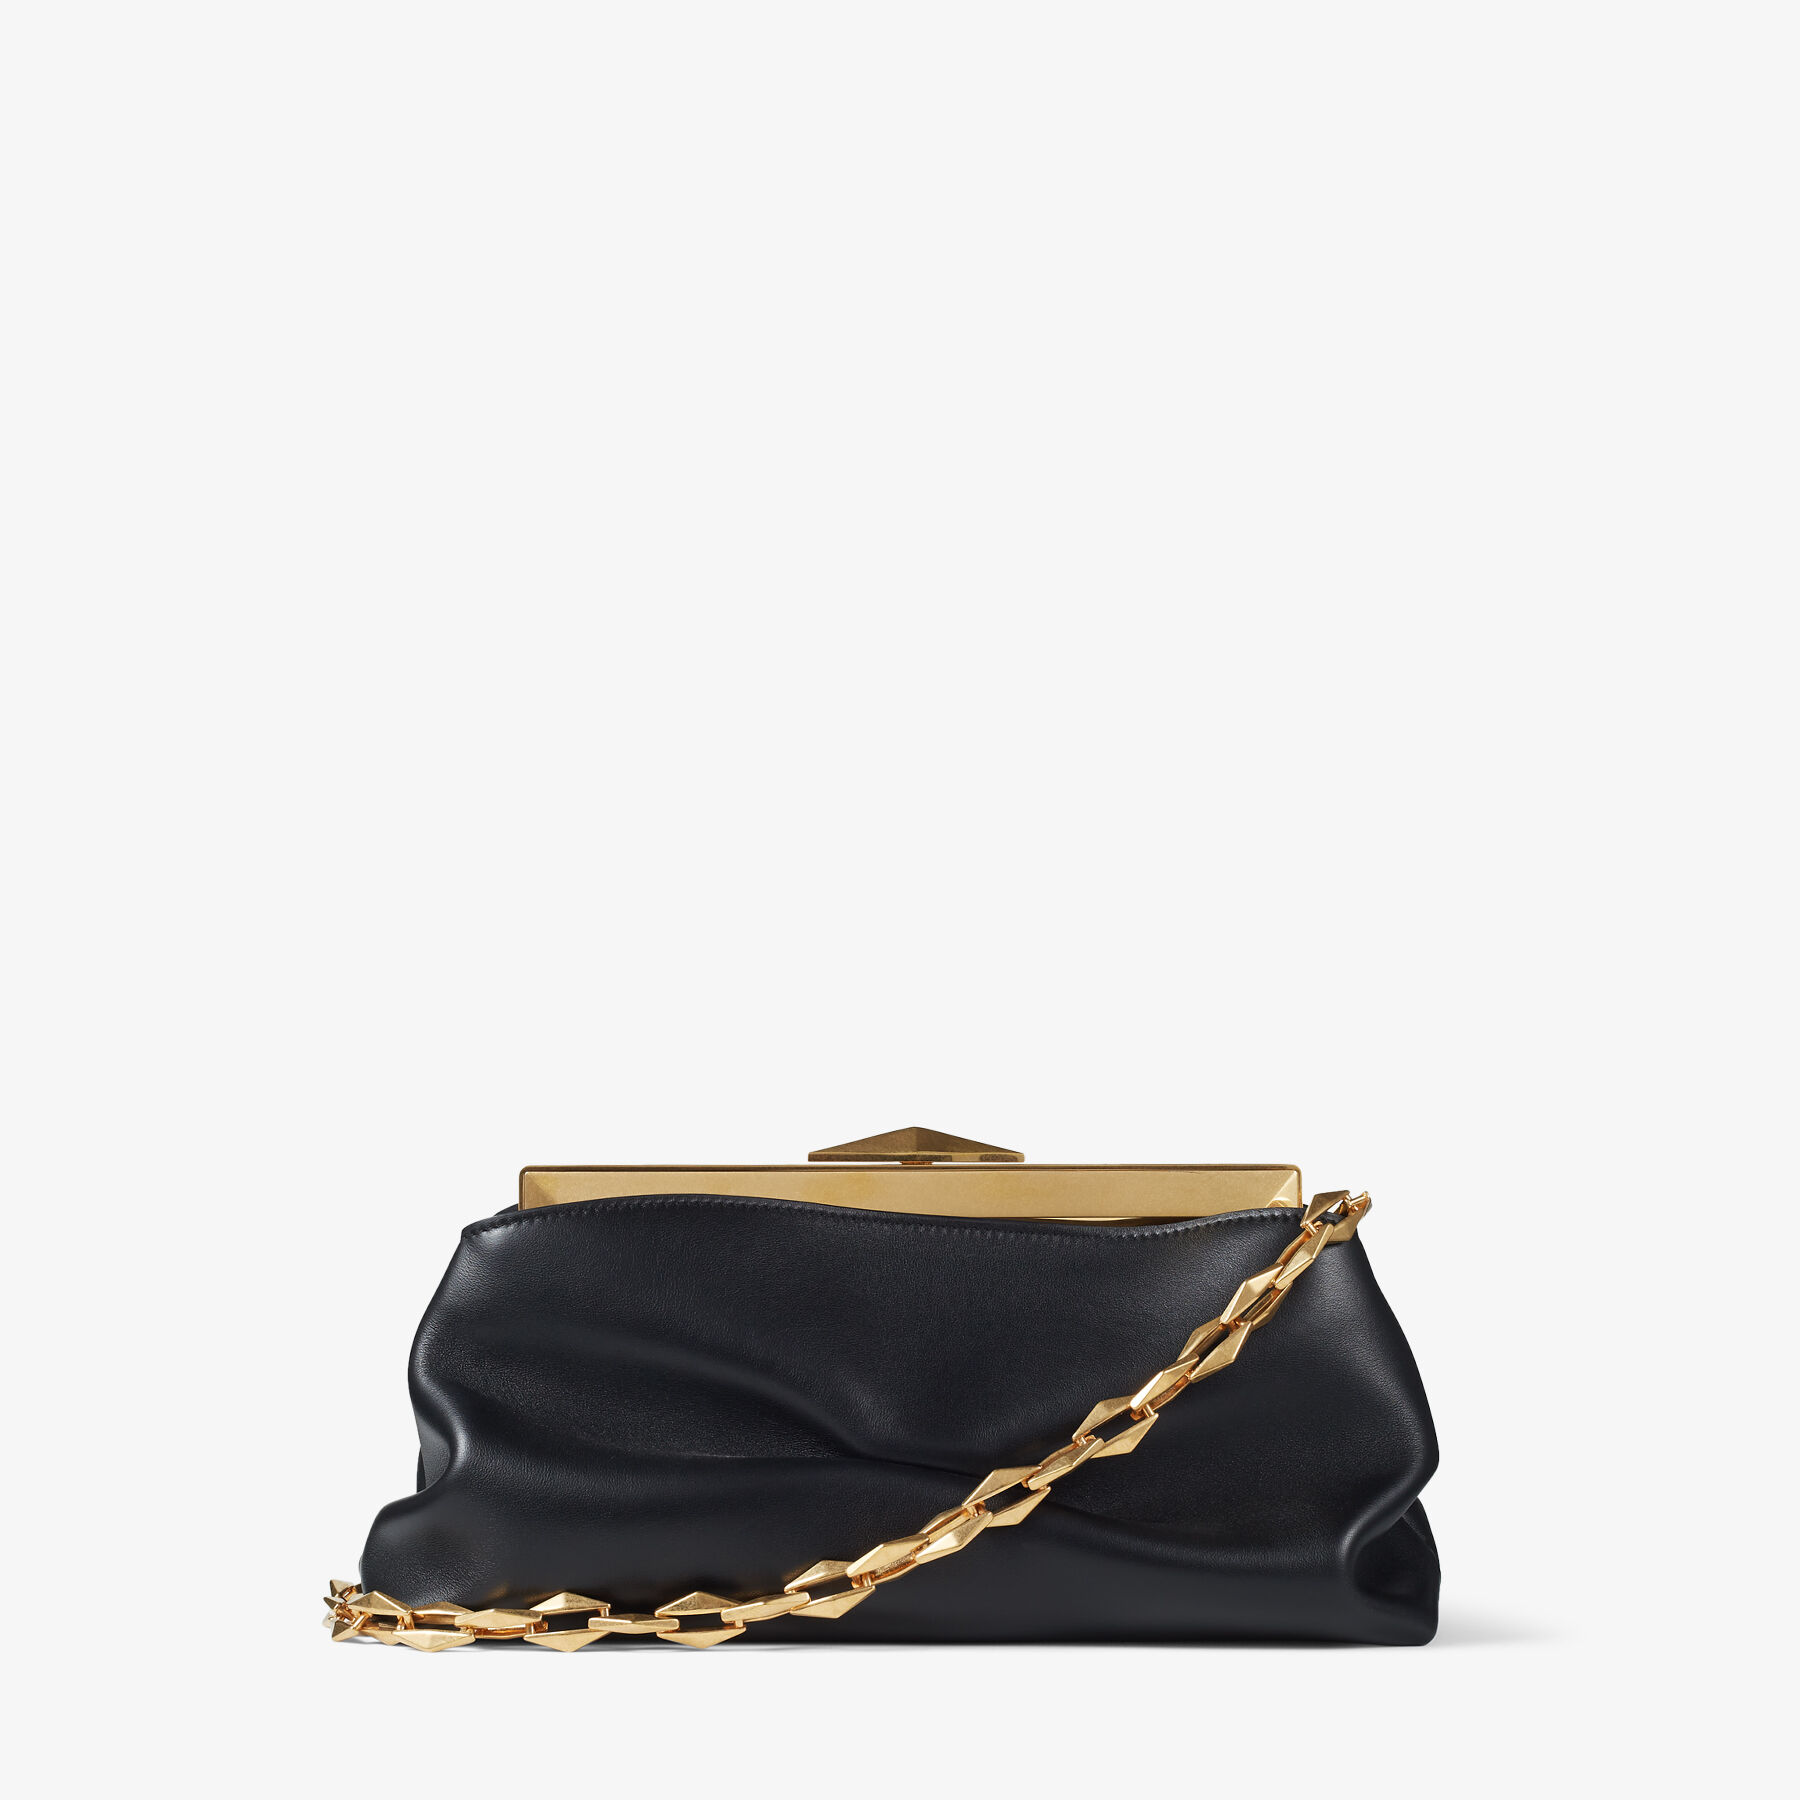 DIAMOND FRAME CLUTCH | Black Soft Calf Leather Clutch Bag with Chain ...